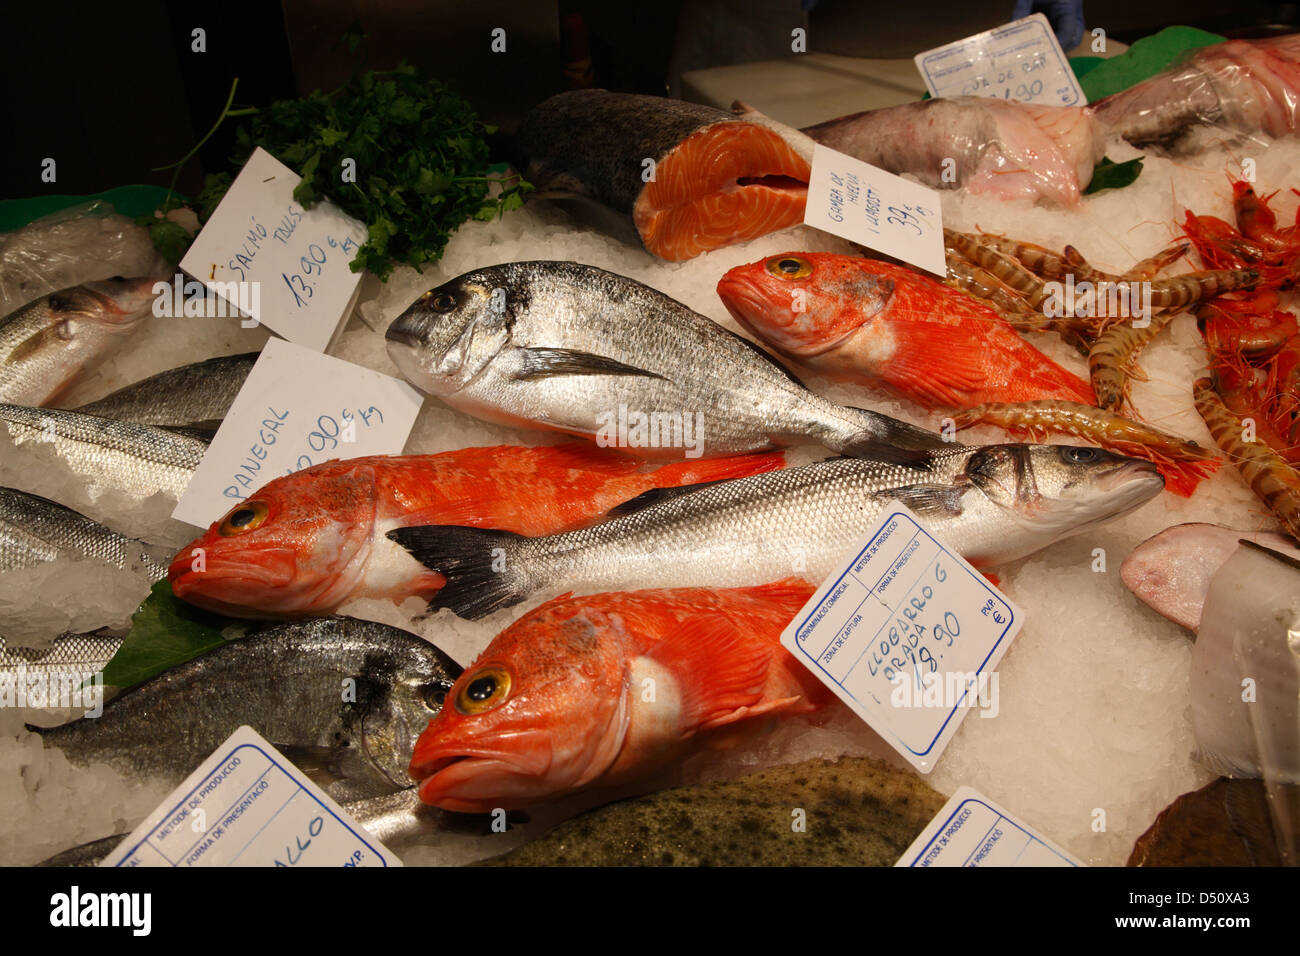 Market hall MERCAT de la BOQUERIA, fish stall, Barcelona, Spain Stock Photo